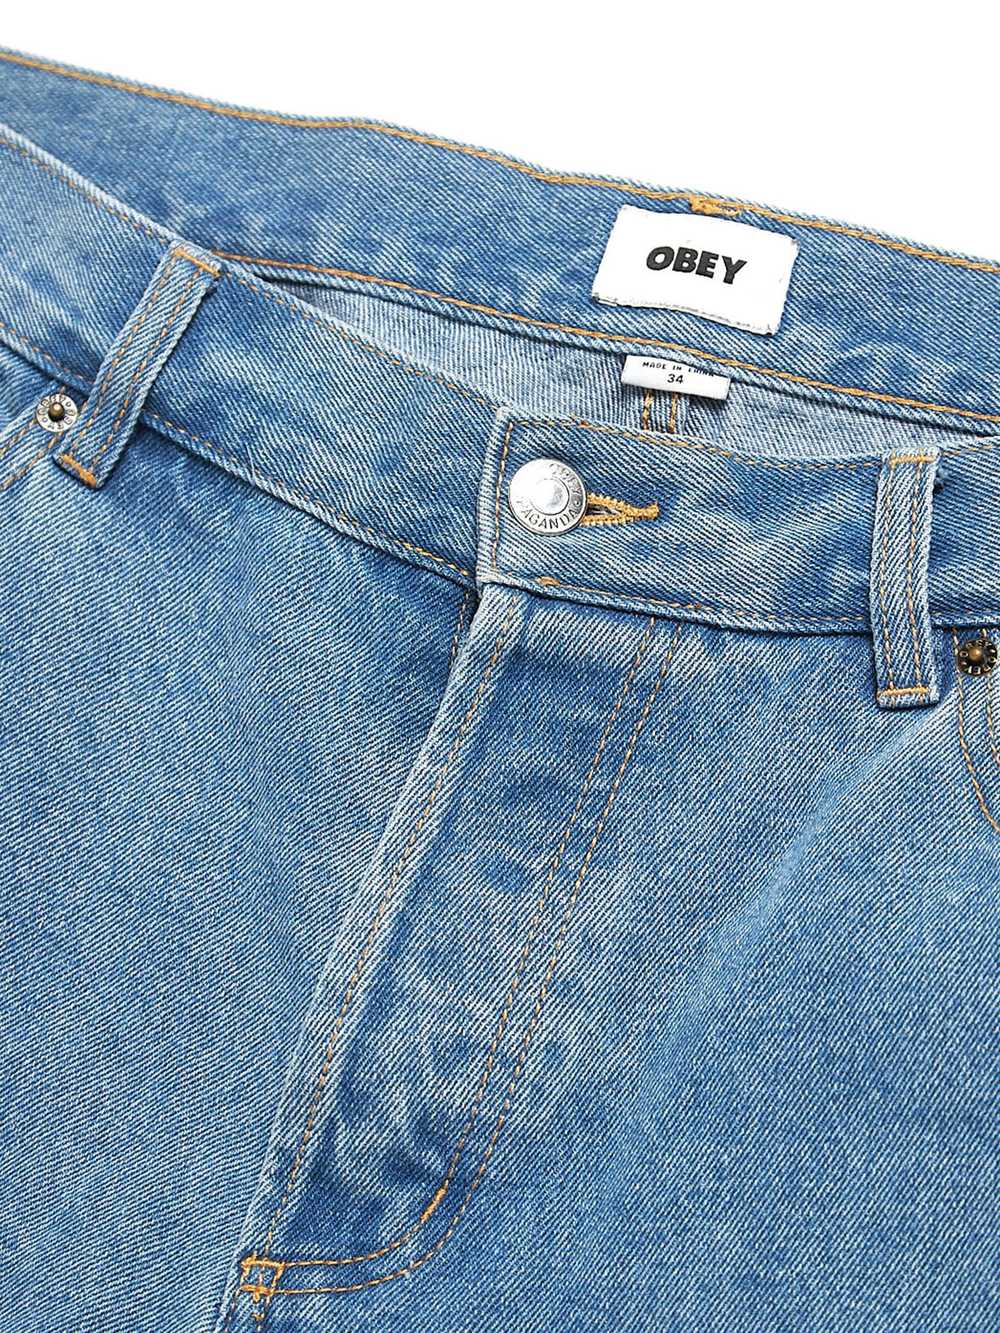 Obey Blue Baggy Cotton Jeans - image 3